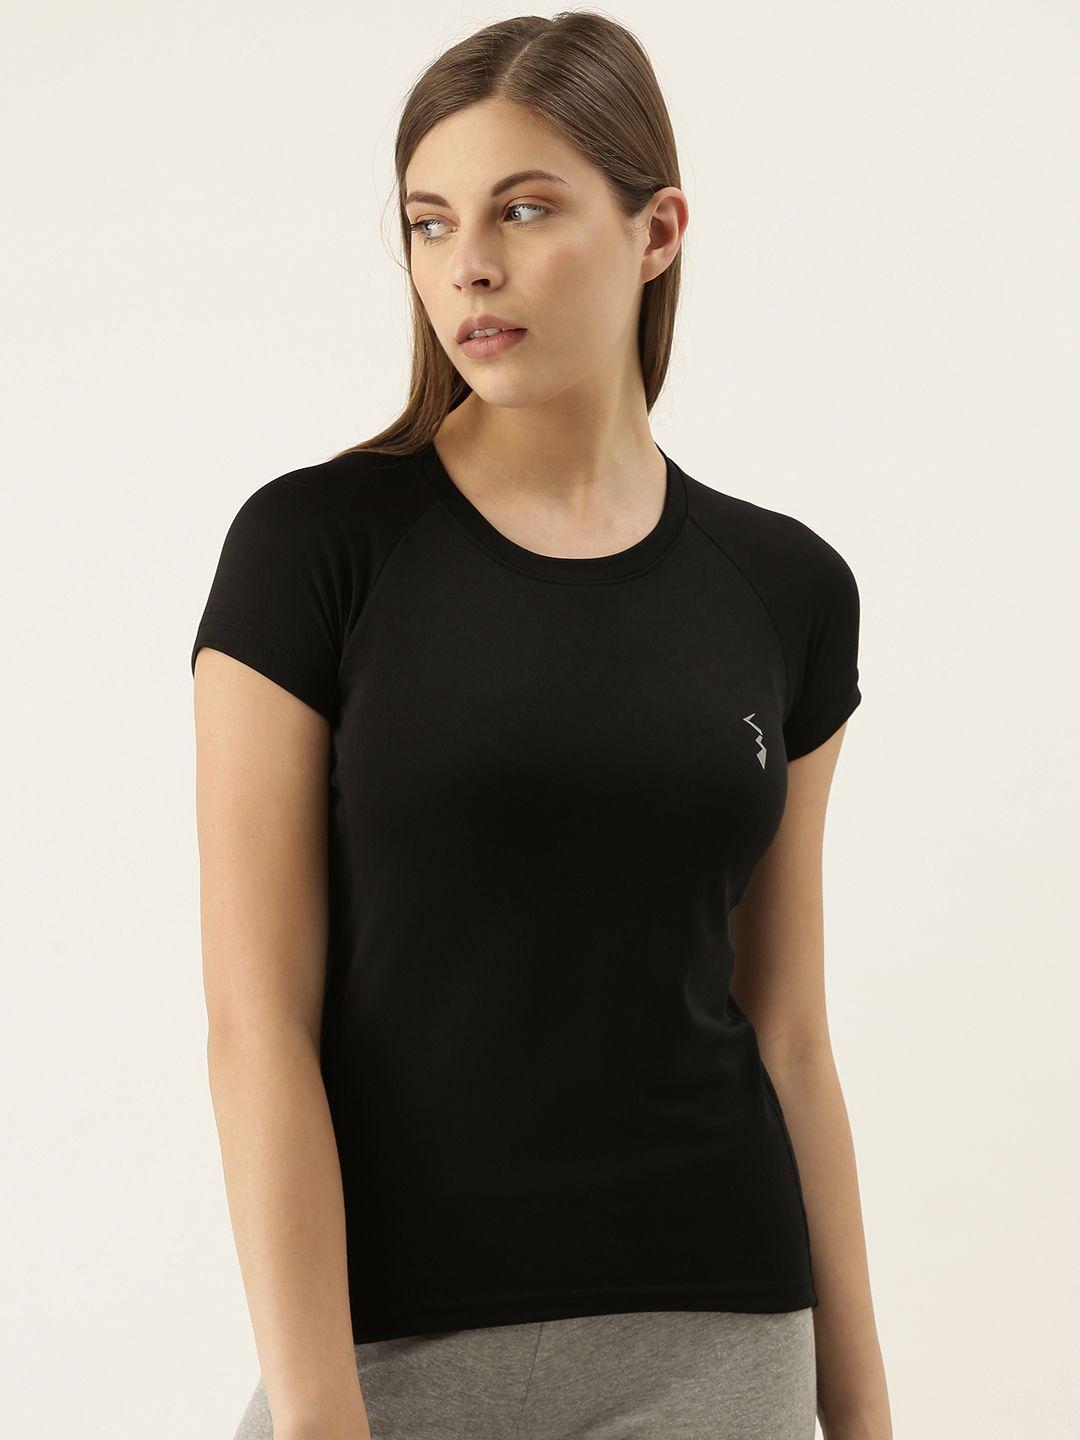 campus sutra women black solid round neck rapid-dry training t-shirt